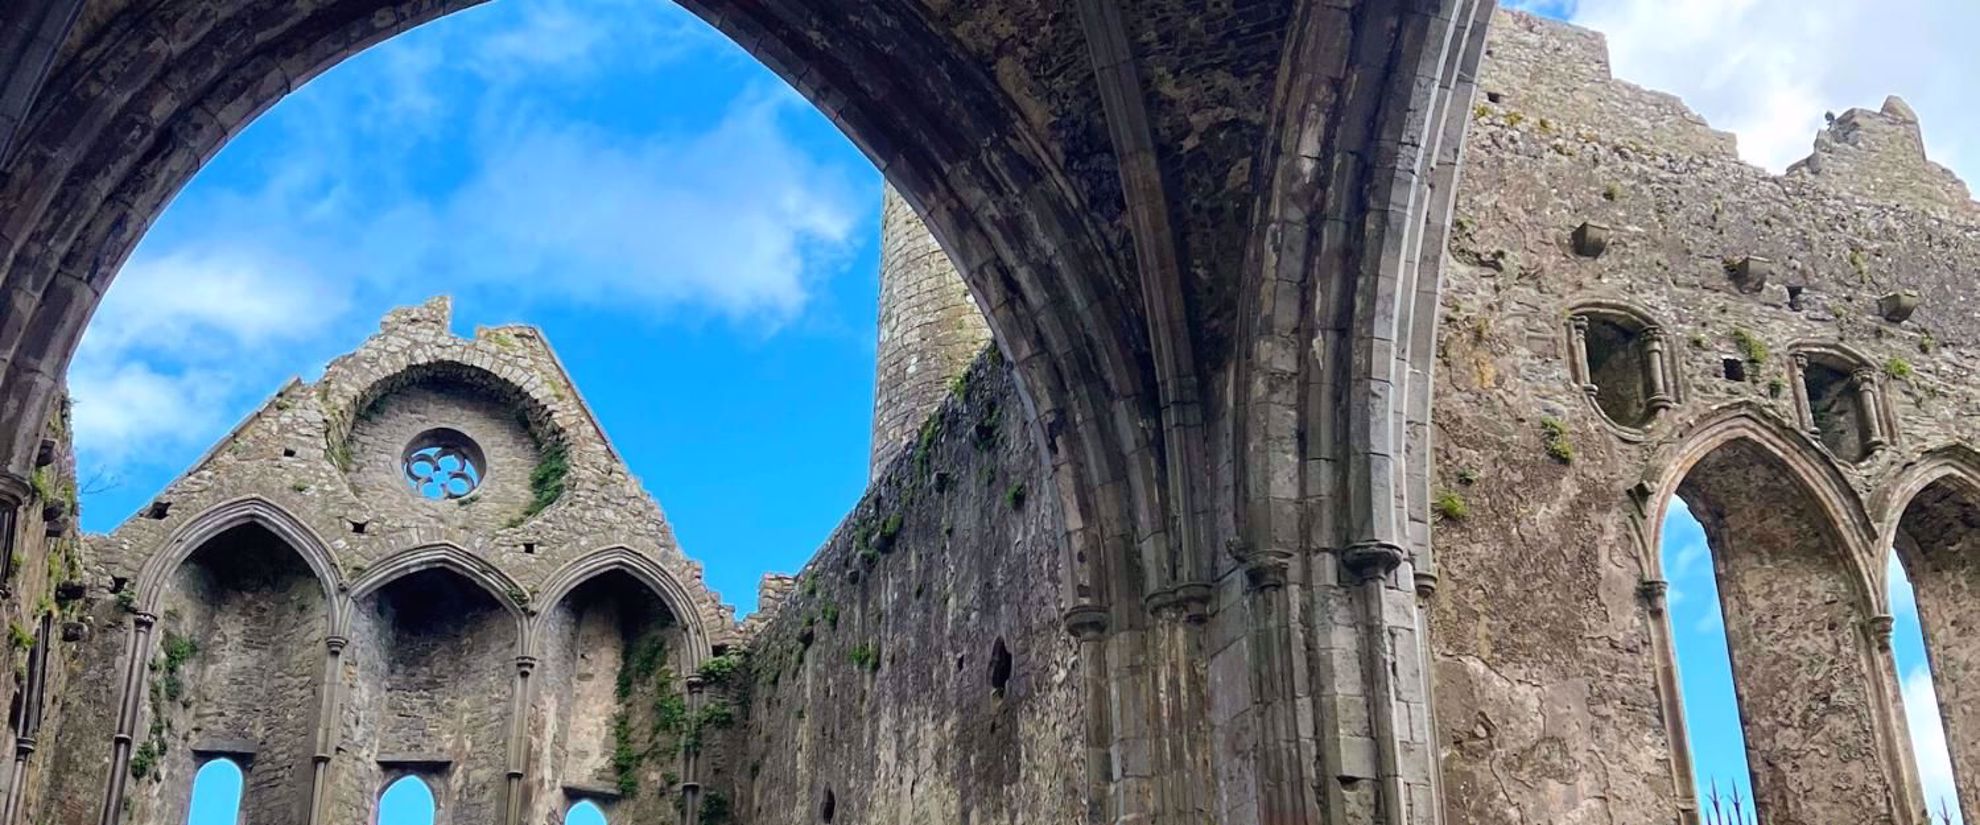 exploring the landmarks of Ireland